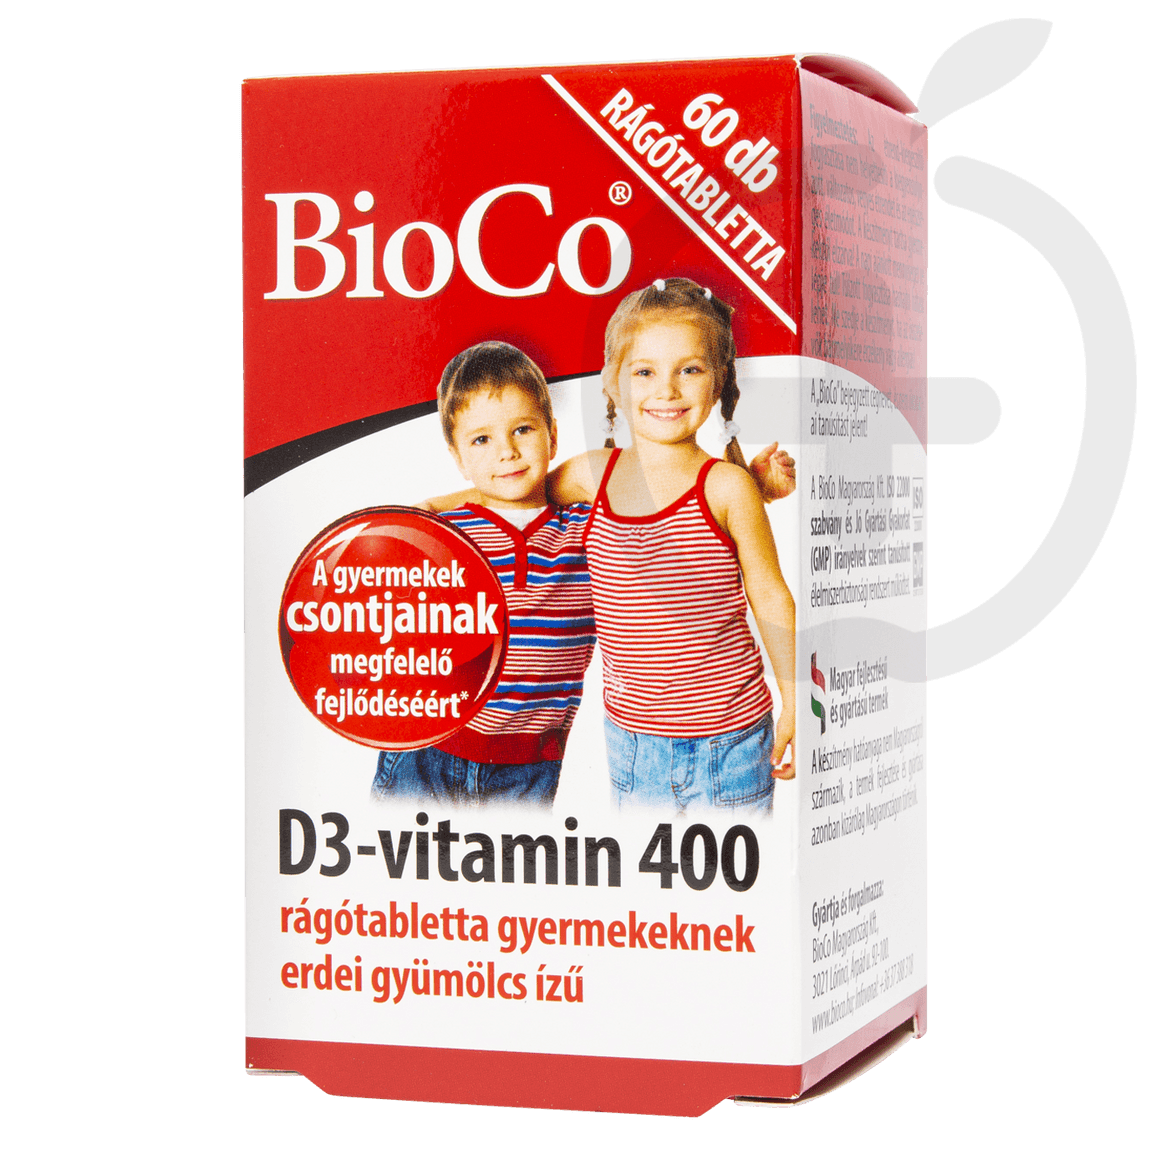 BioCo D3-vitamin 400 gyermekeknek rágótabletta